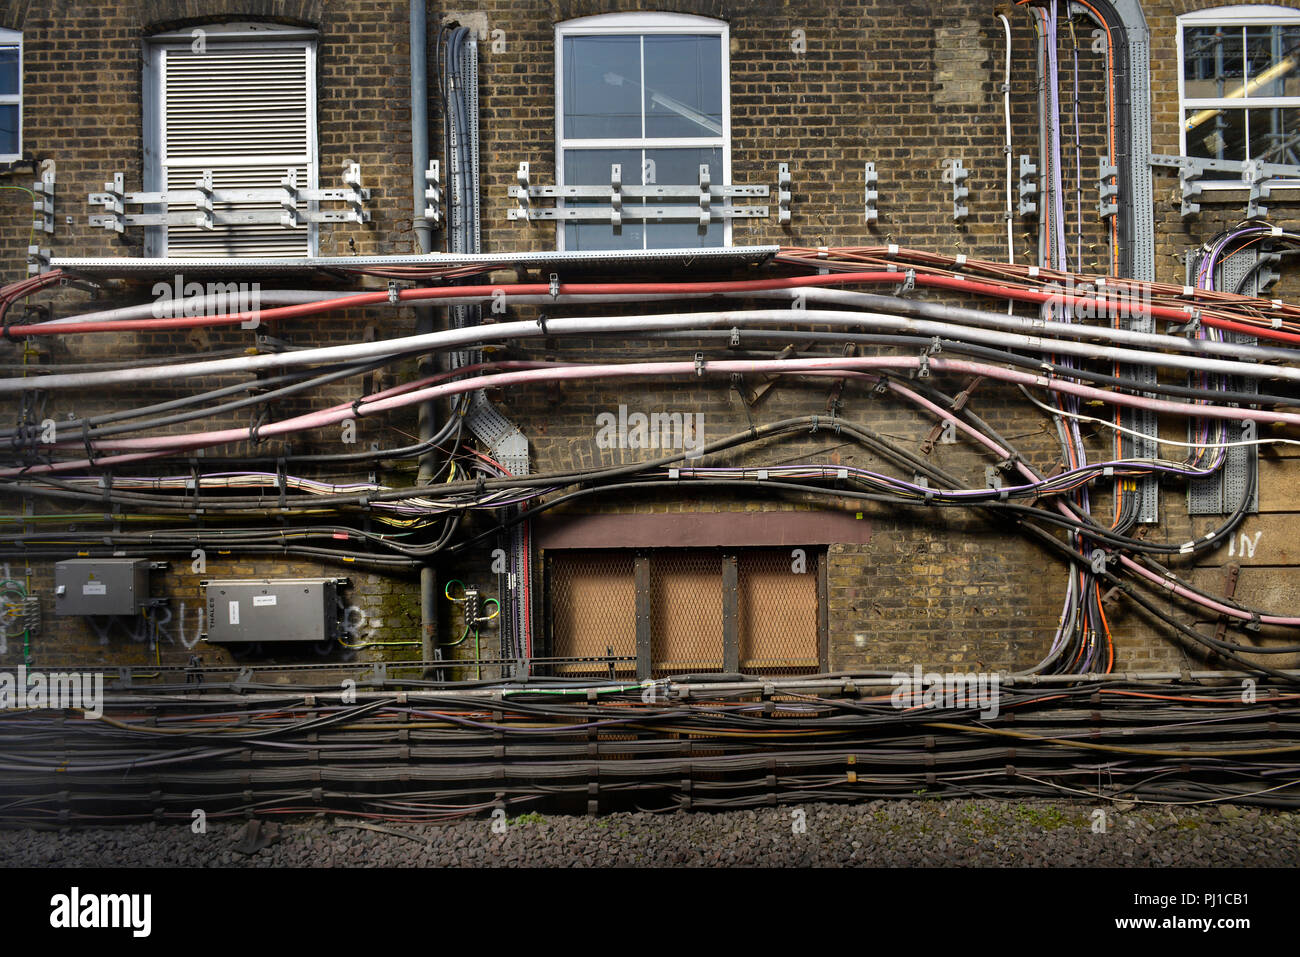 Kabel, U-Bahn, Whitechapel Station, London, England, Grossbritannien  Stockfotografie - Alamy